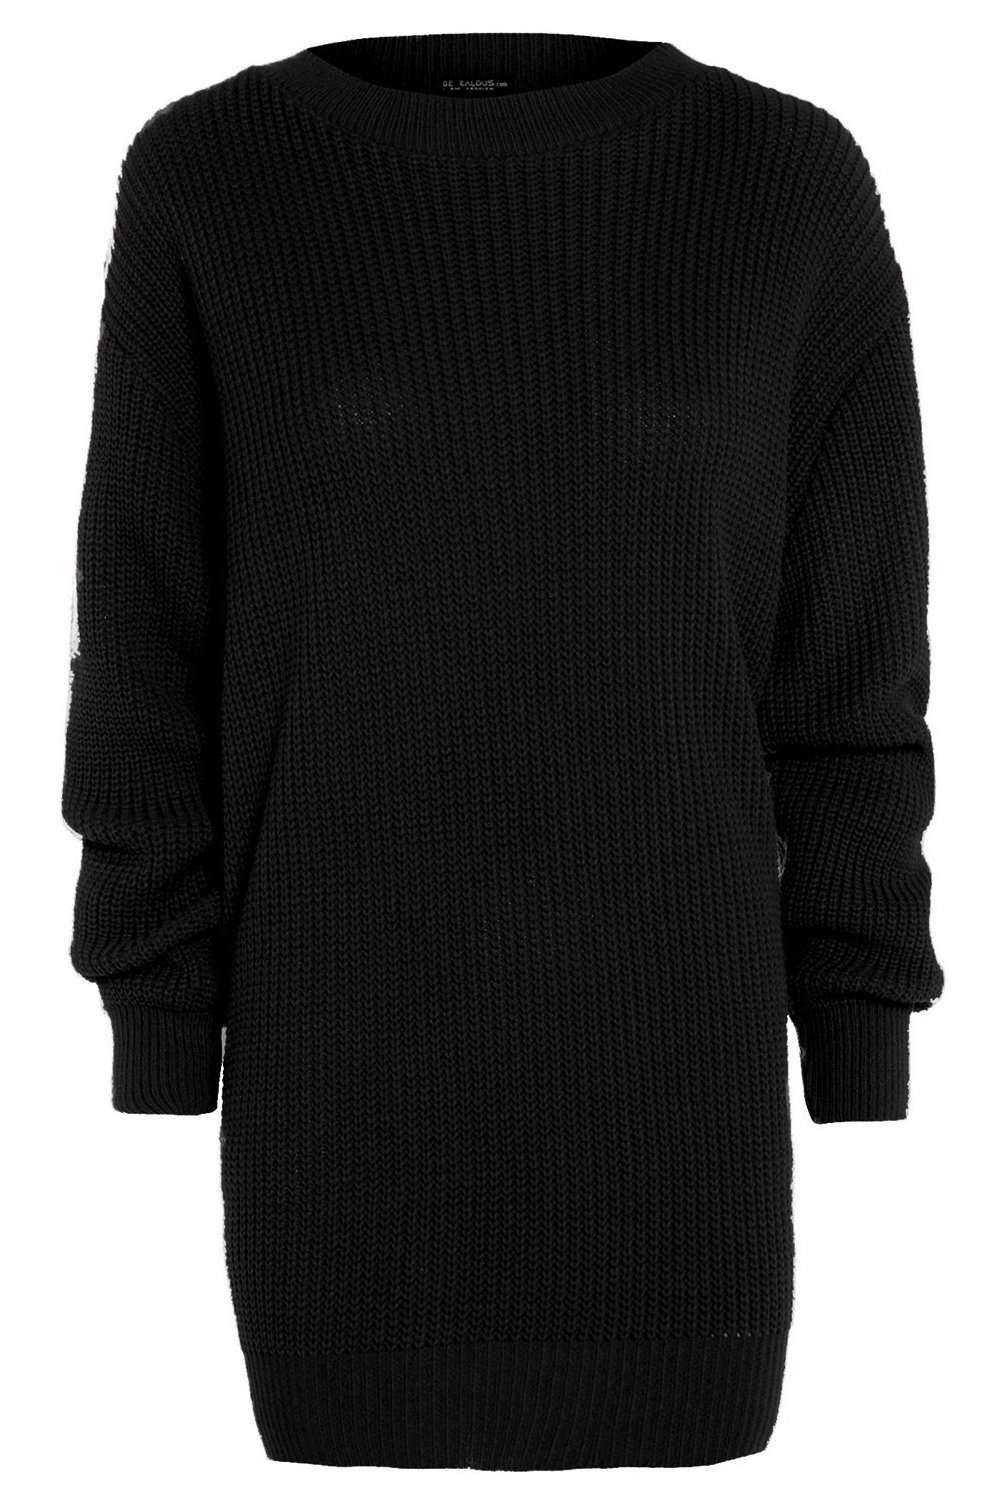 Fran Long Sleeve Oversized Knitted Jumper Dress - bejealous-com